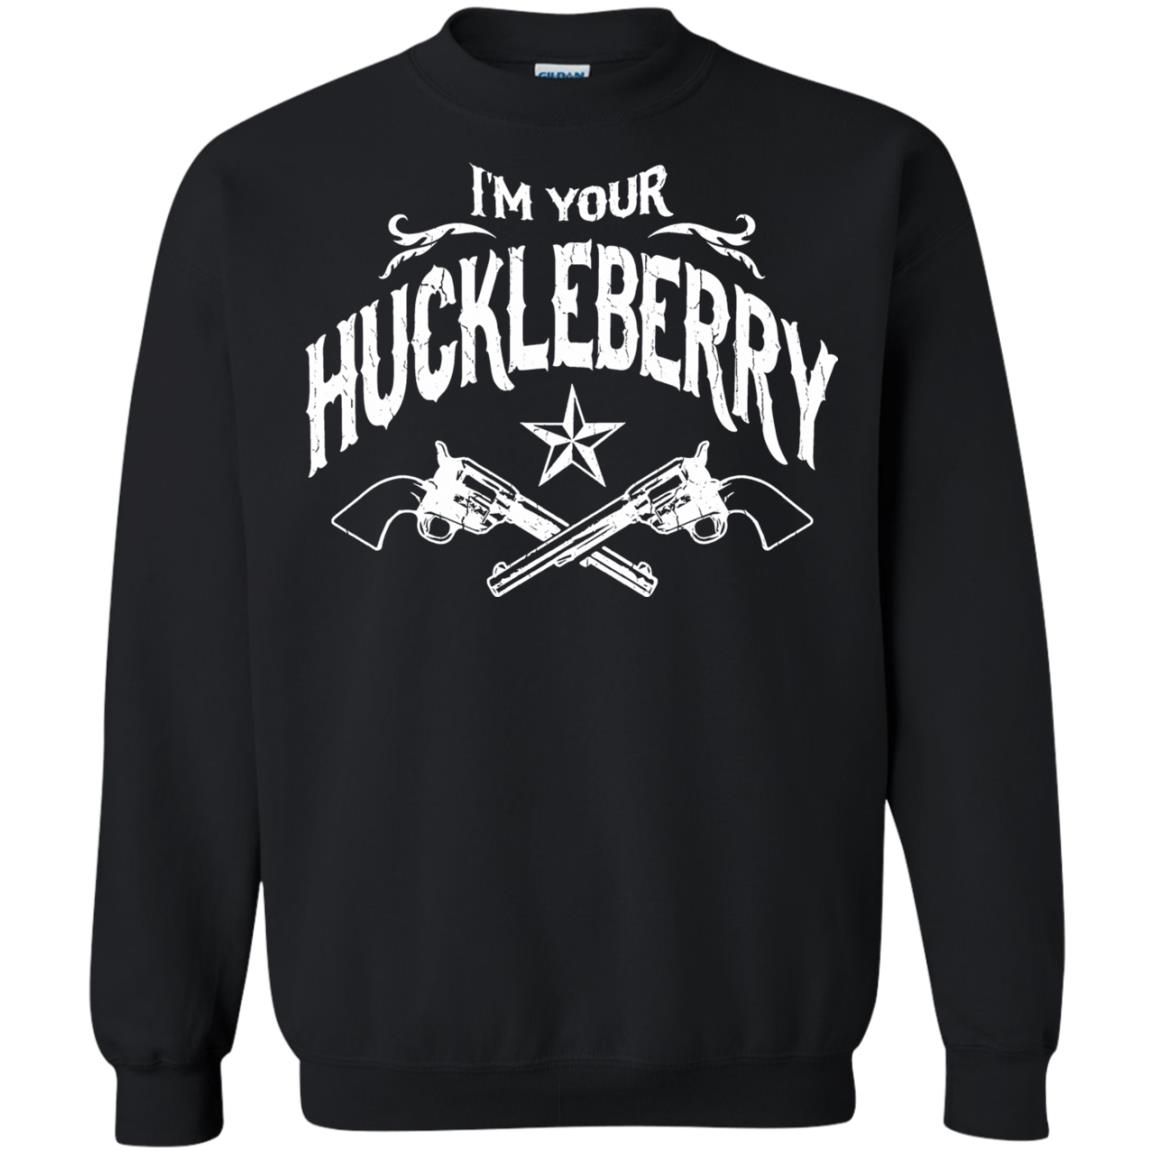 i'm your huckleberry sweatshirt - black